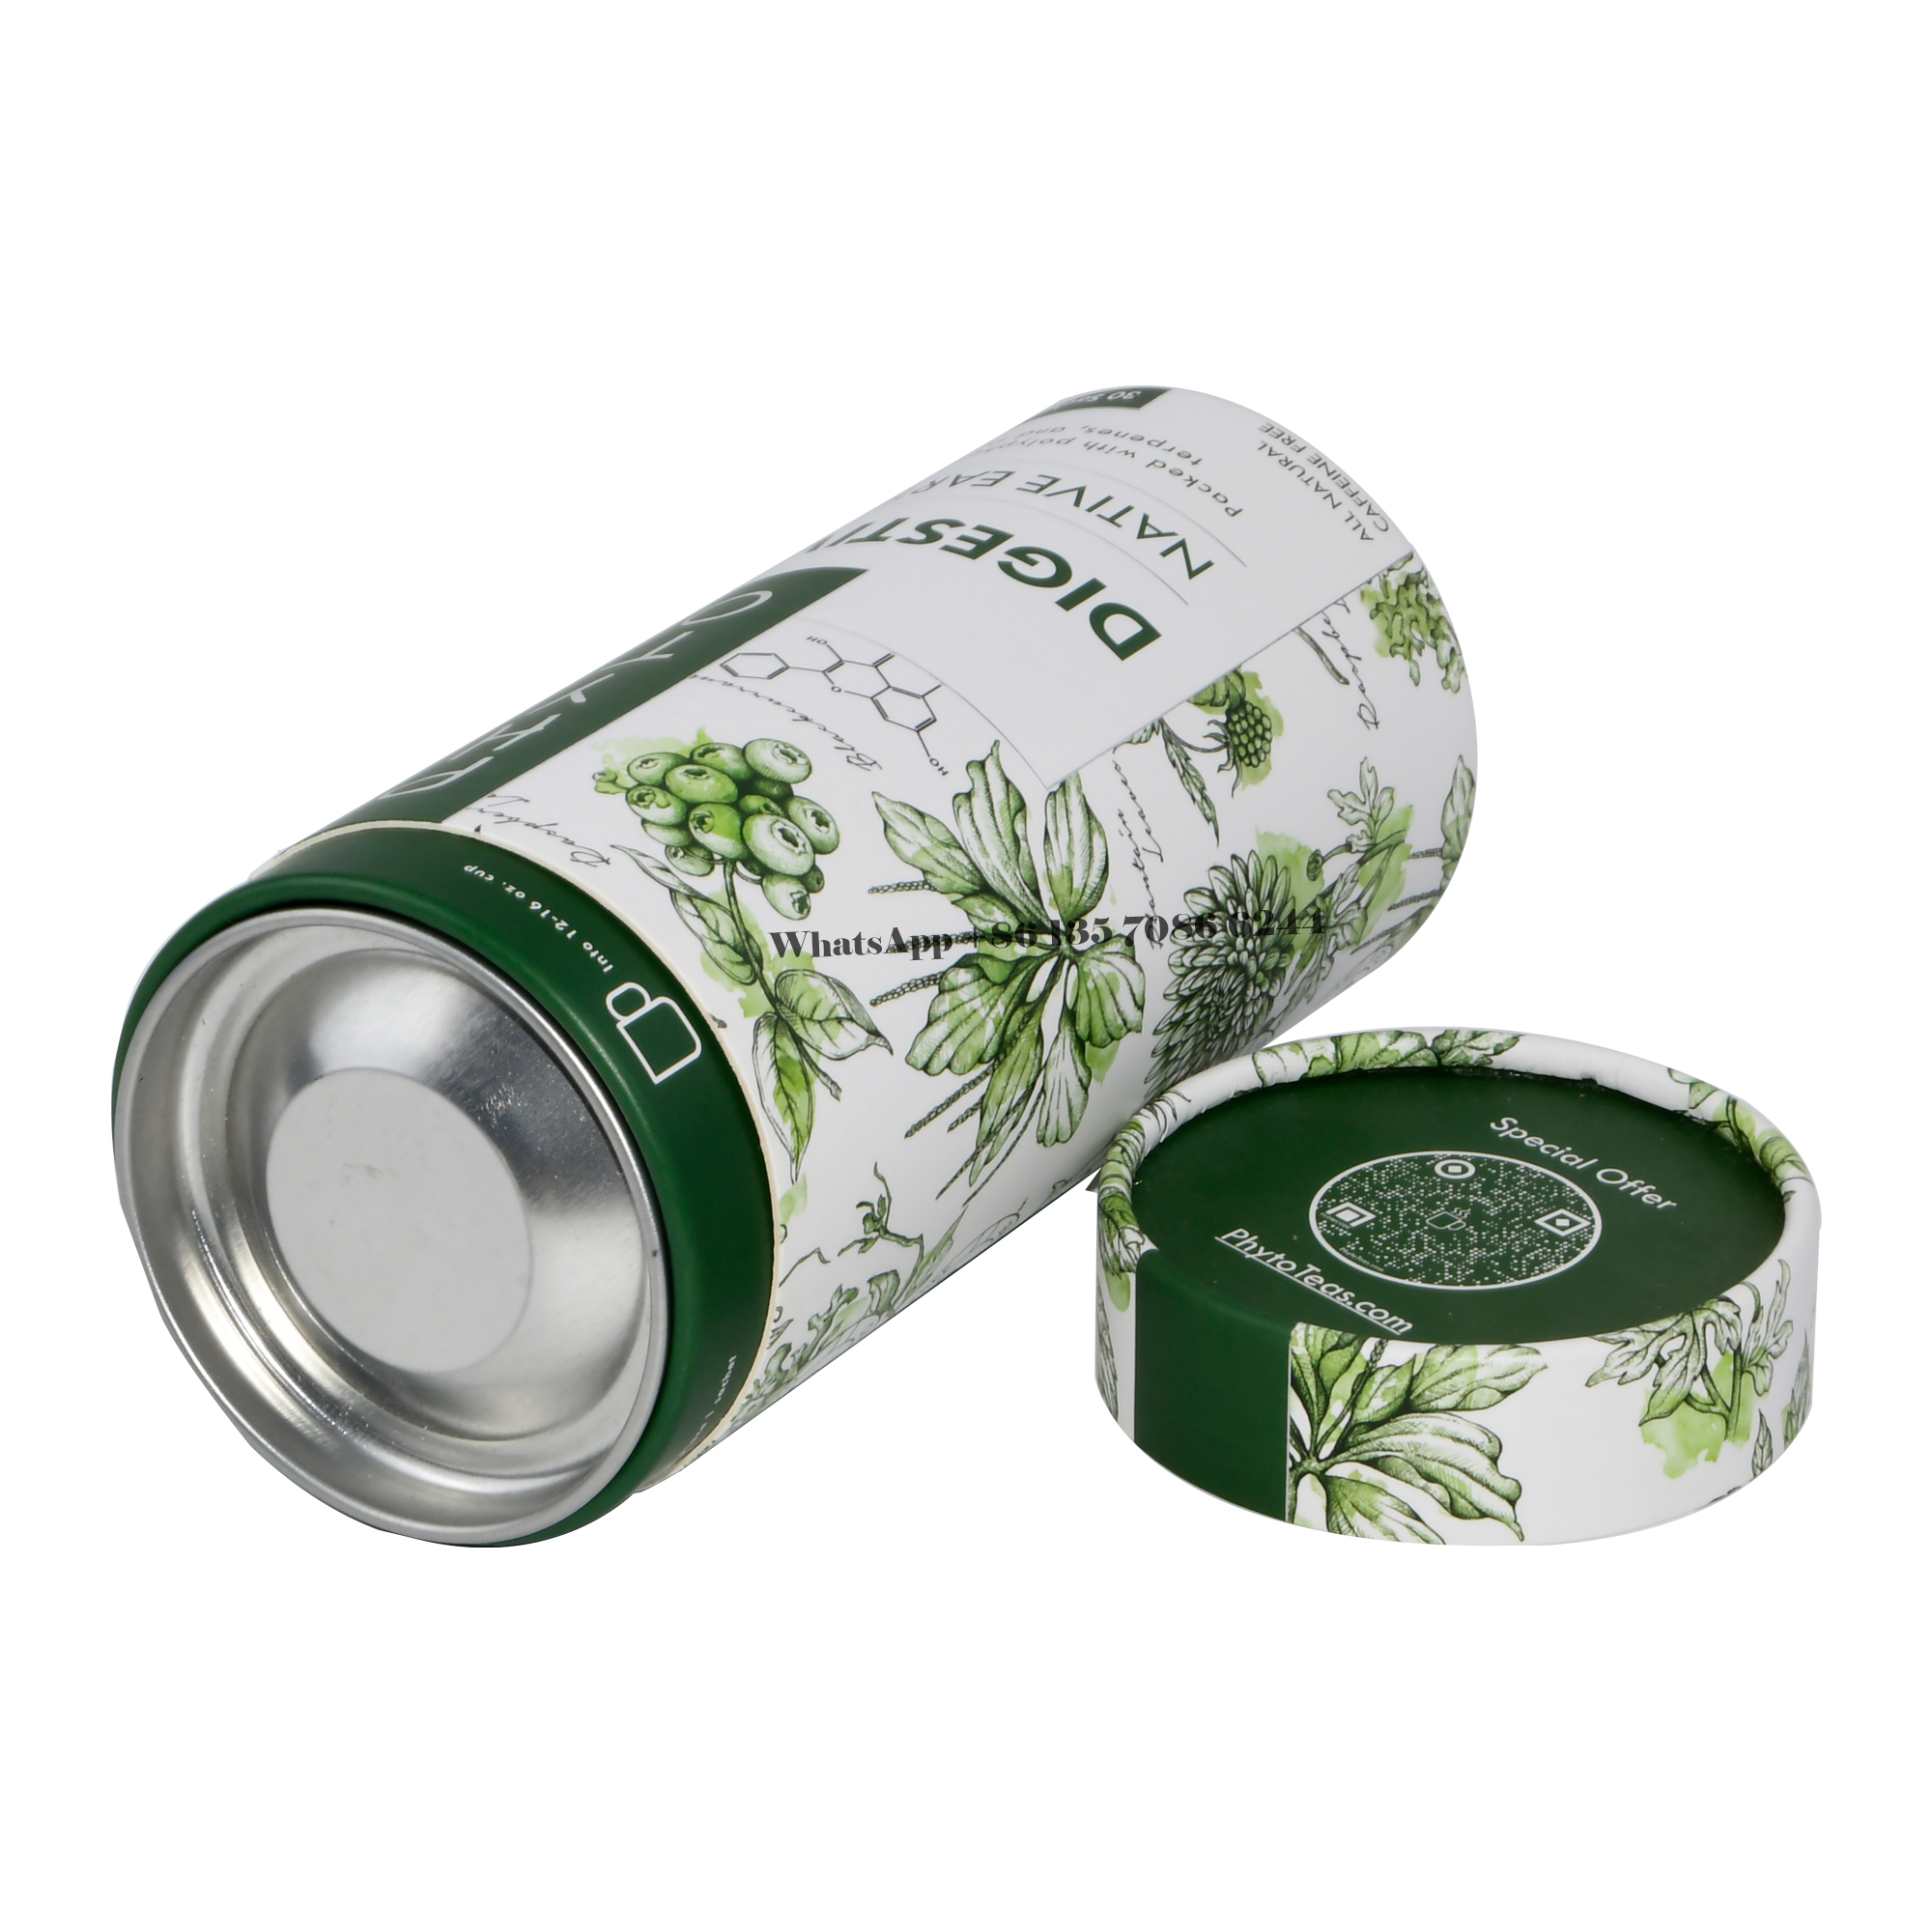  Caja redonda de embalaje de tubo de papel para un té blend exquisito y elegante  